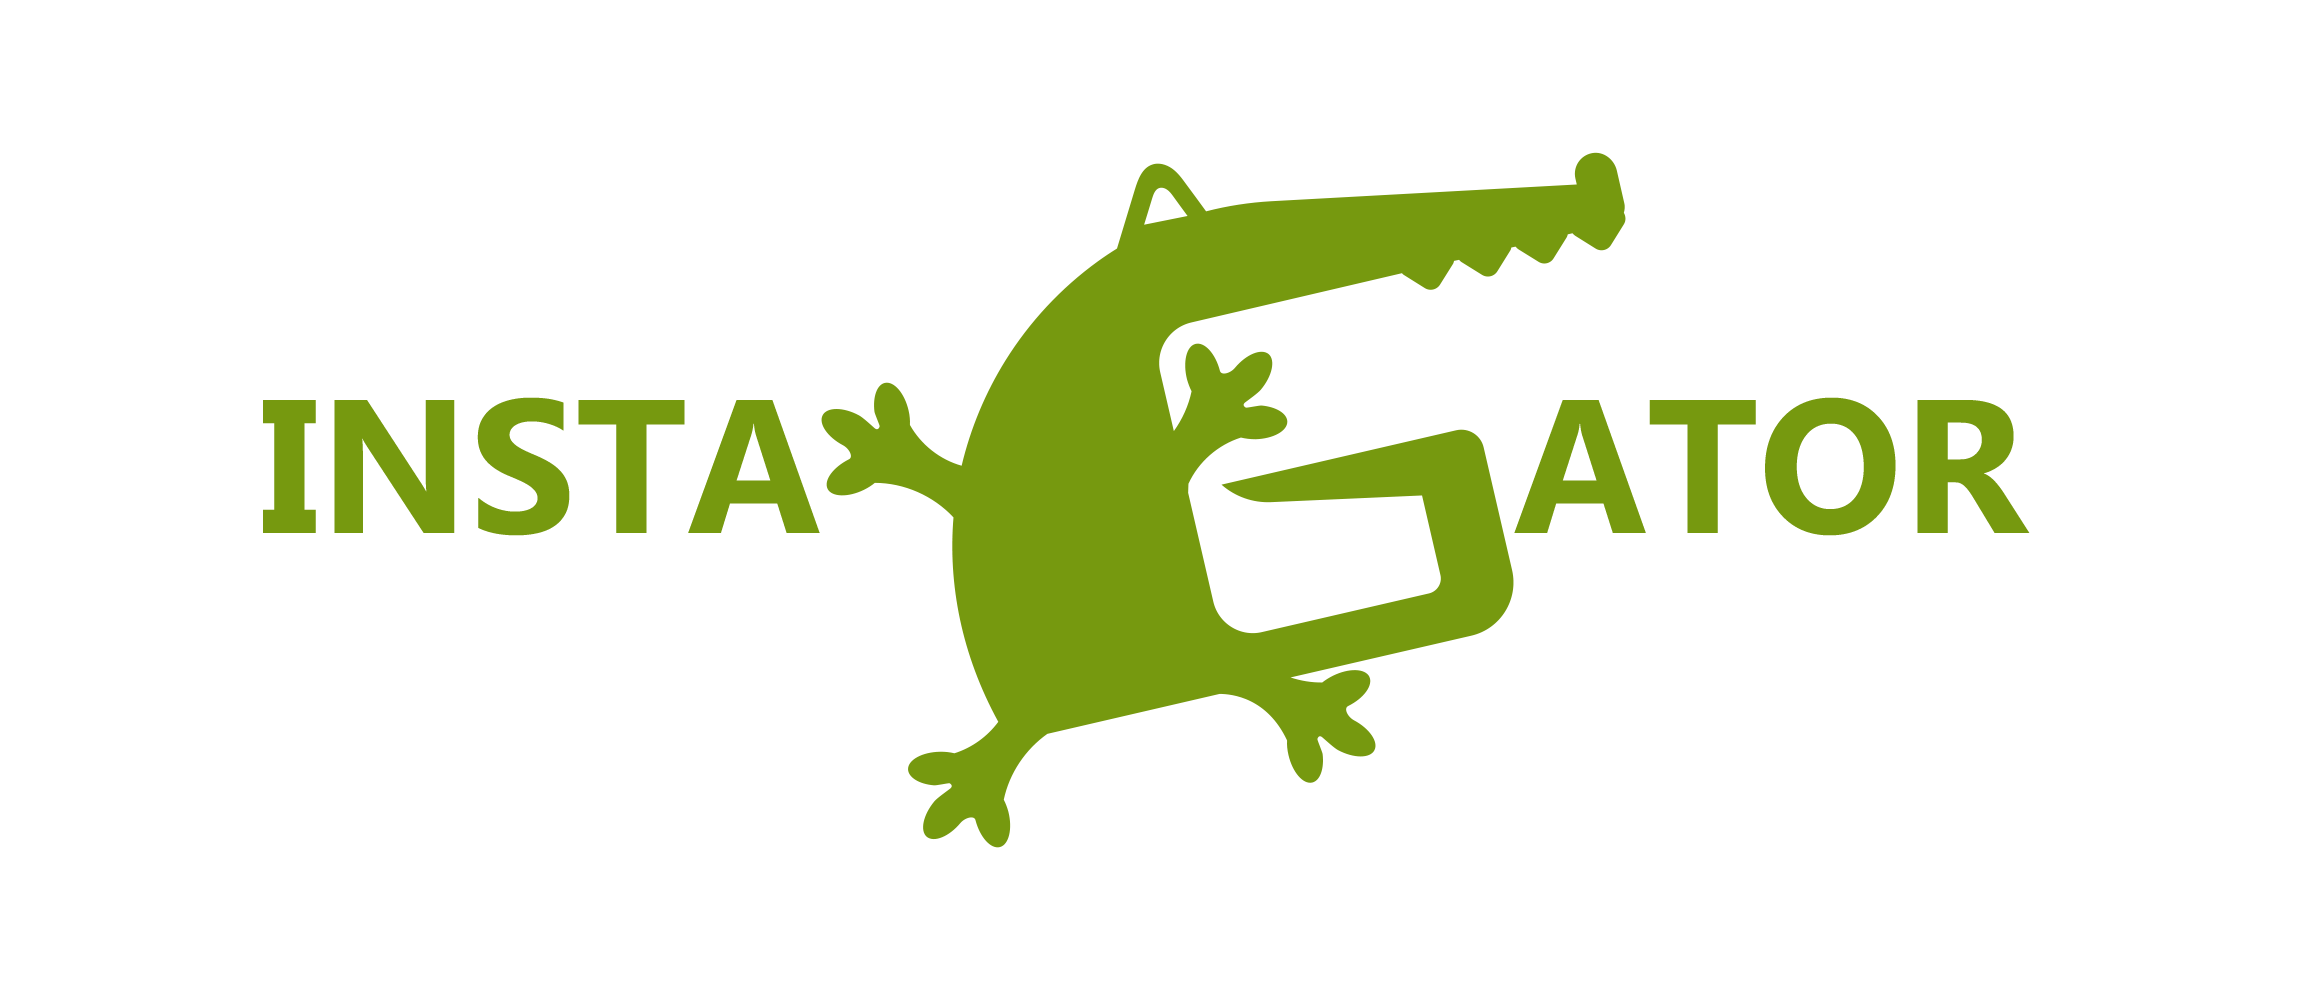 Gator recycling equipment manufacturer